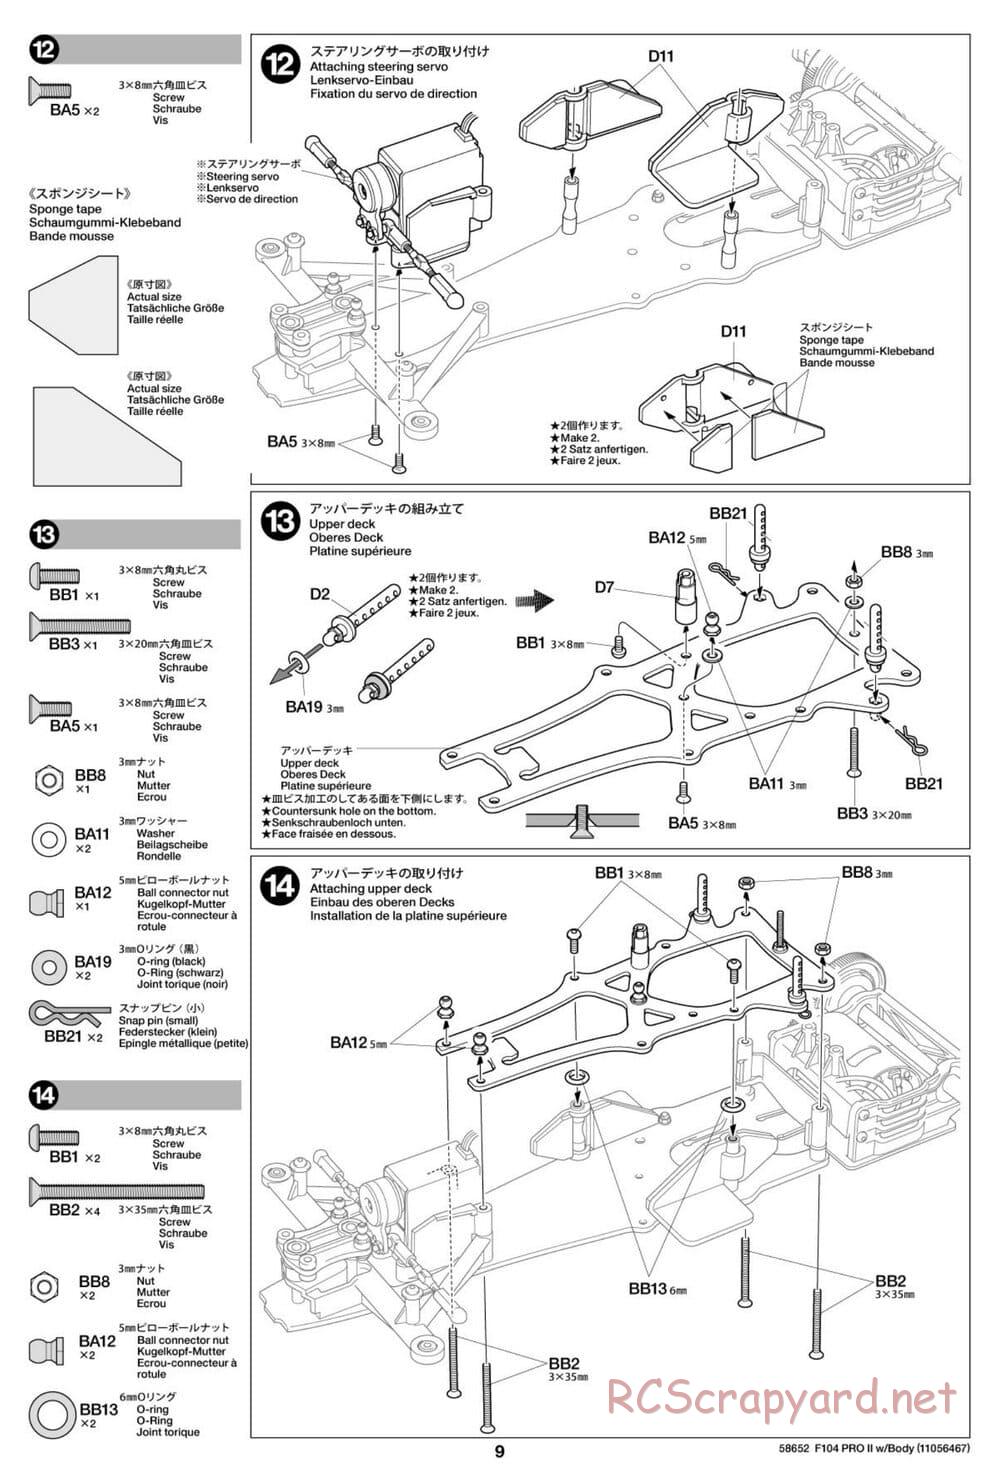 Tamiya - F104 Pro II Chassis - Manual - Page 9